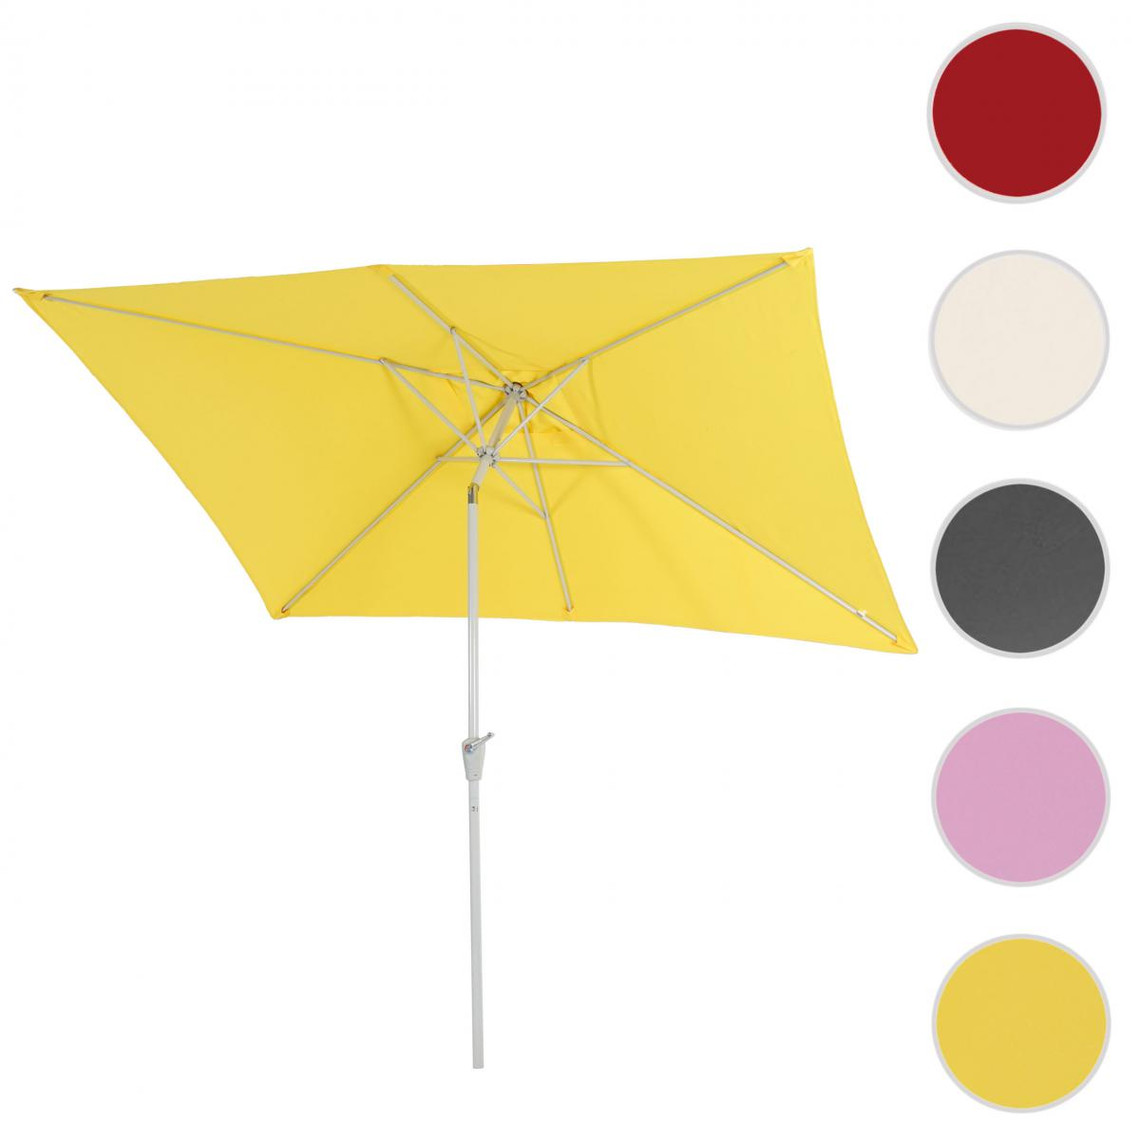 Mendler Parasol N23, parasol de jardin, 2x3m rectangulaire inclinable, polyester/aluminium 4,5kg ~ jaune